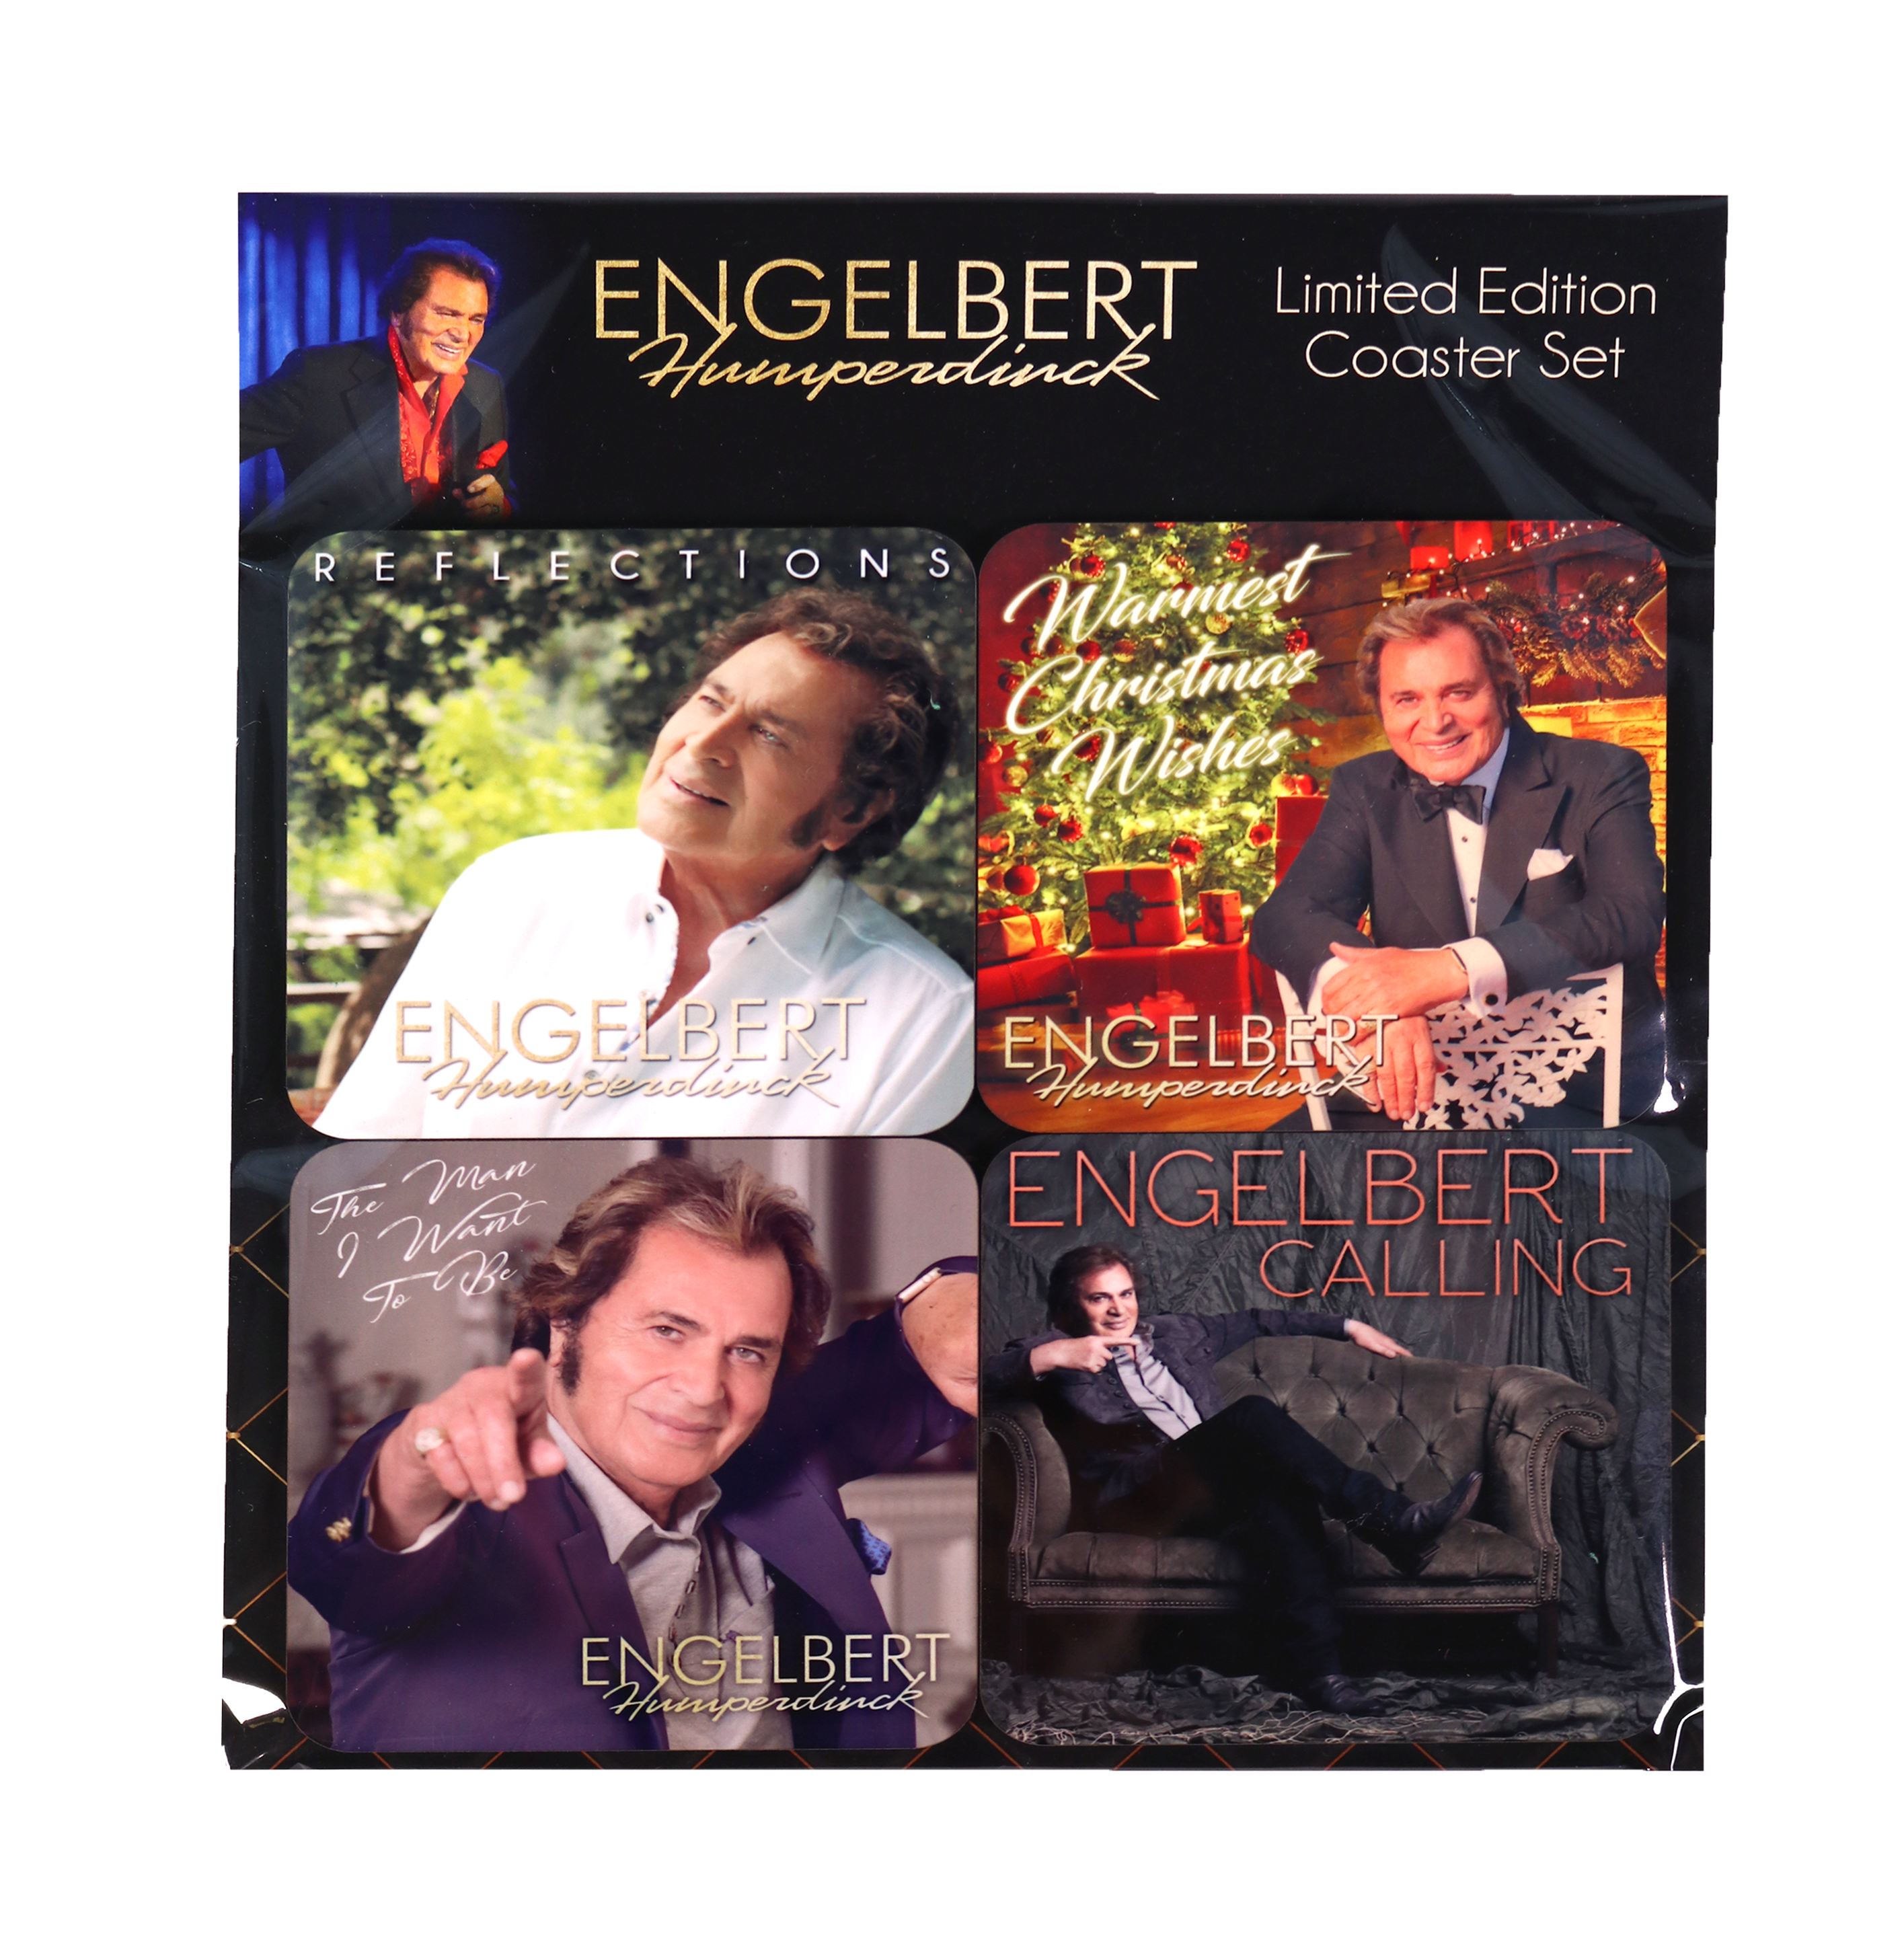 ENGELBERT HUMPERDINCK - Limited Edition Coaster Set